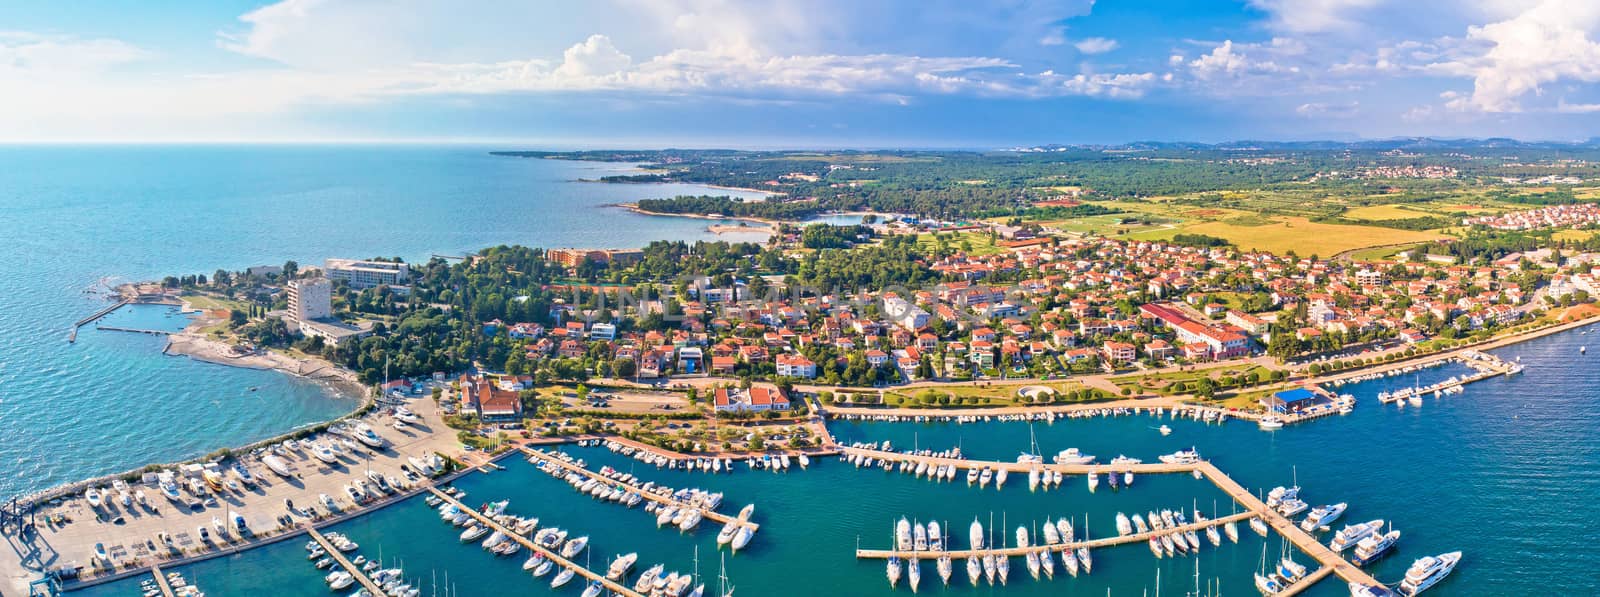 Adriatic coastline of Umag architecture aerial view by xbrchx